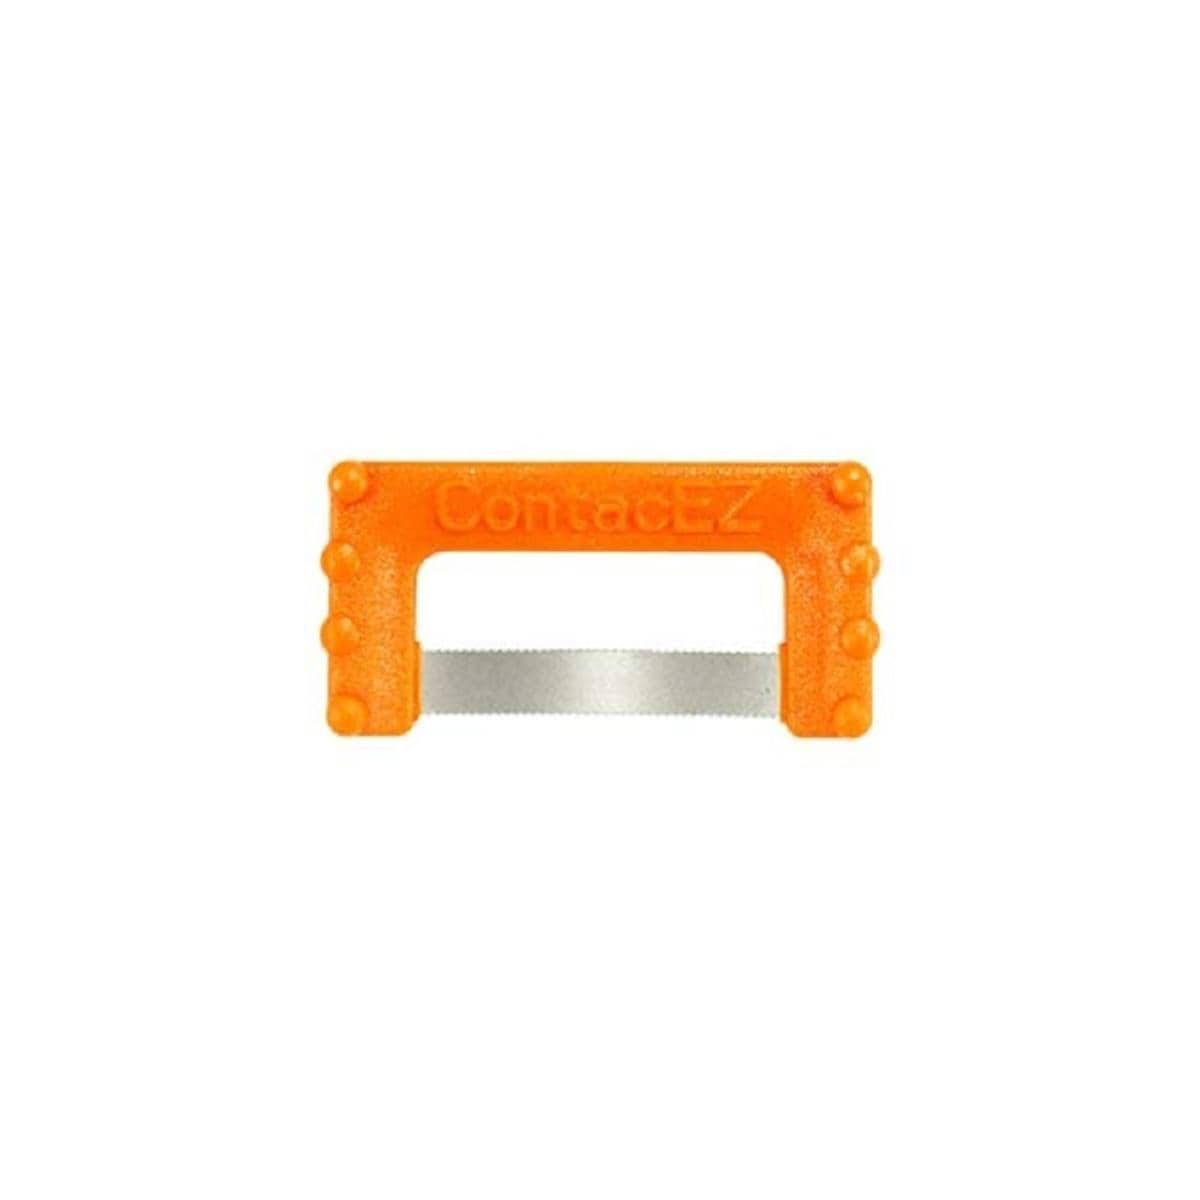 ContacEZ Restorative Strip - navulling - REF. 31208 - Oranje, 8 stuks